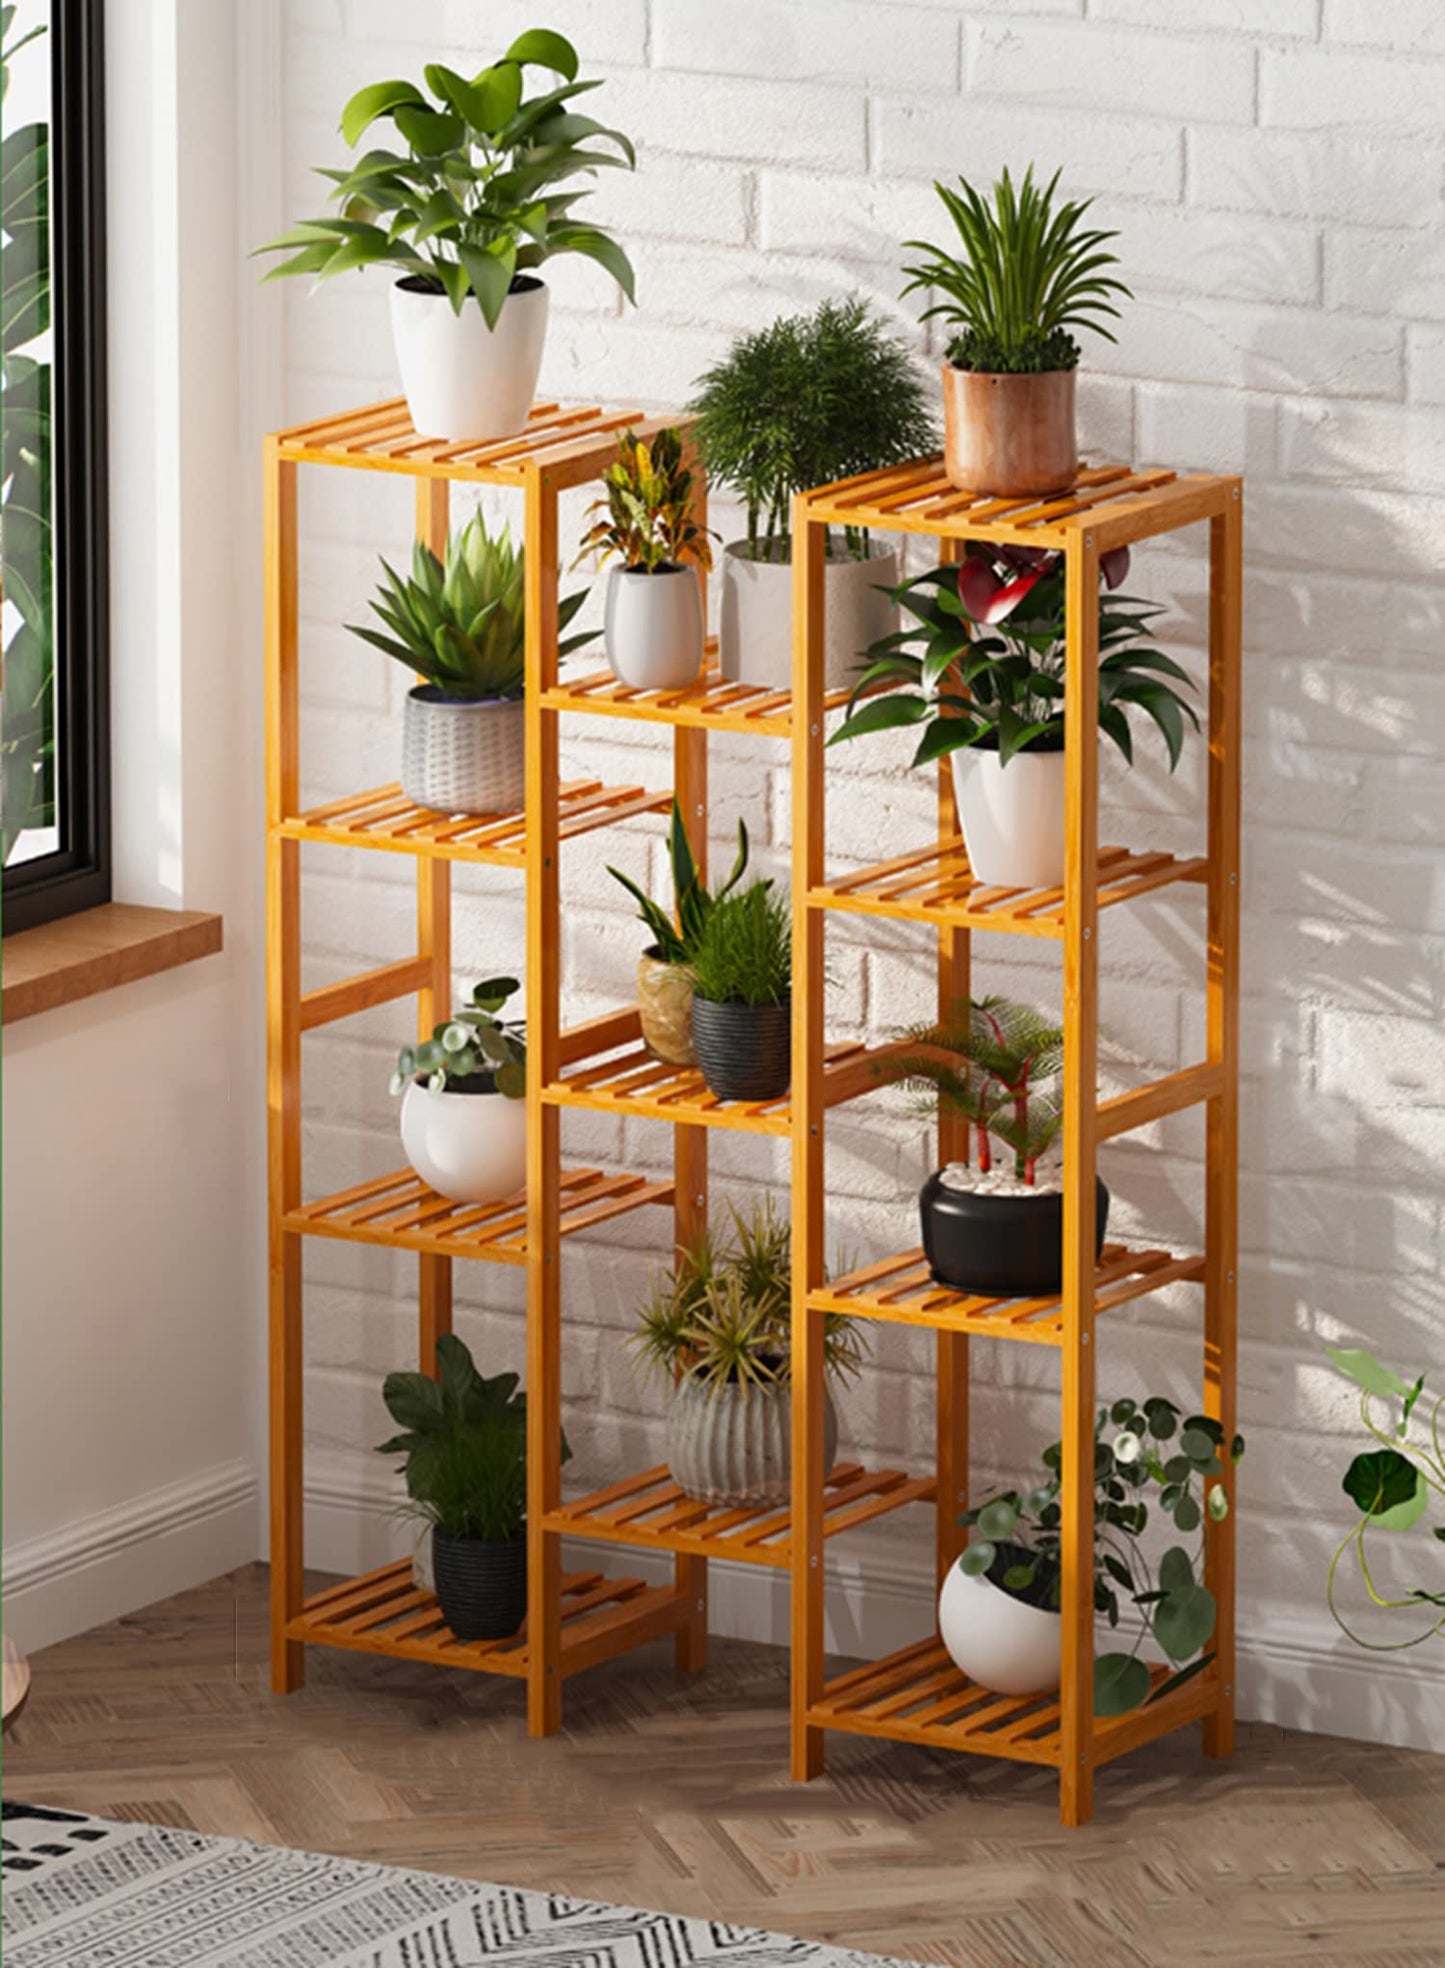 Wooden Plant Stands for Indoor Plants - brown